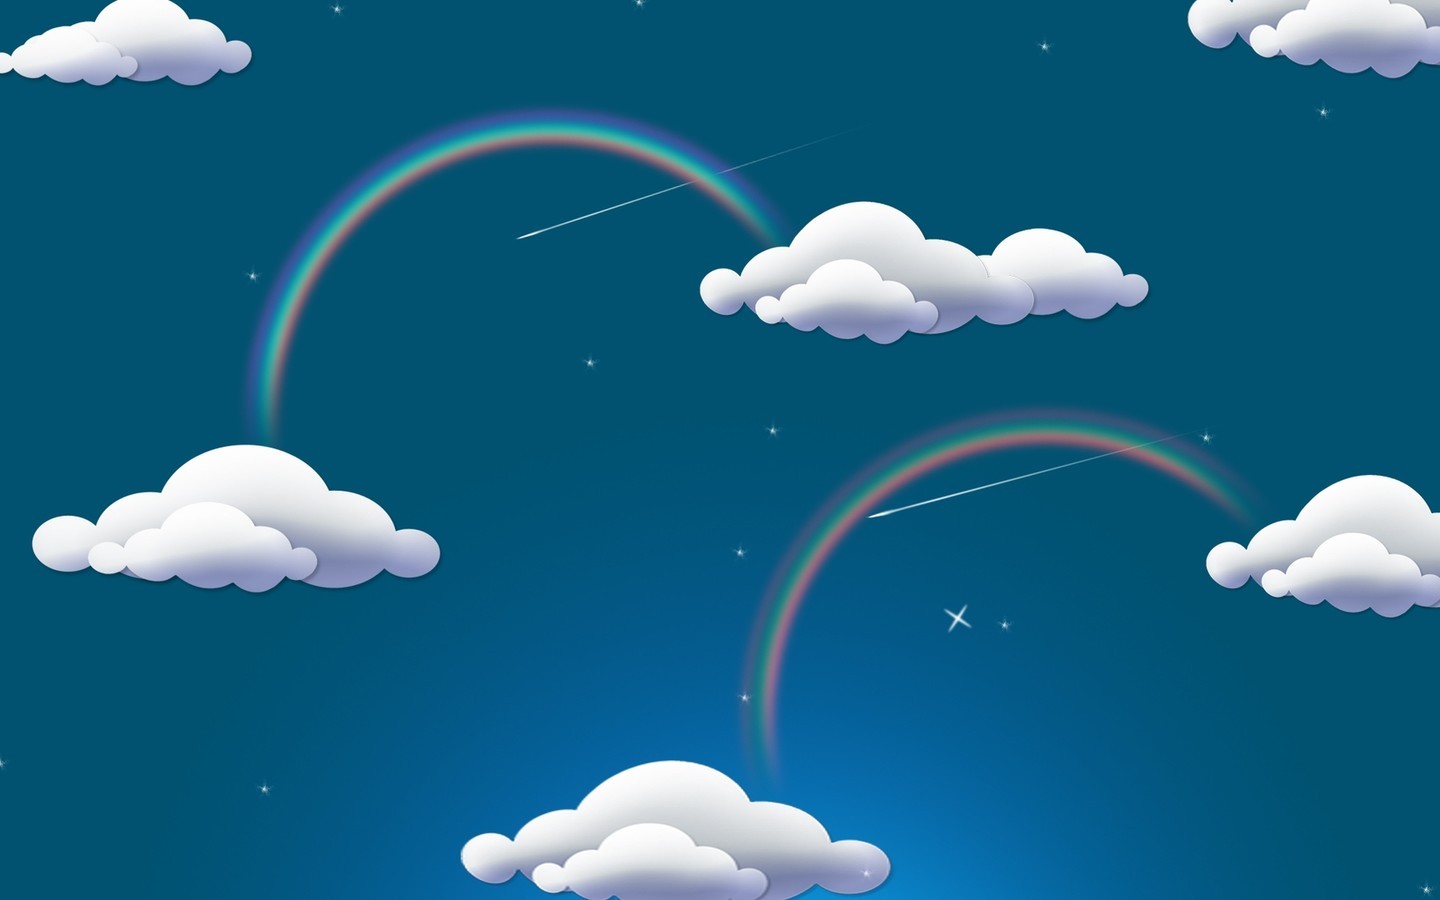 General 1440x900 digital art blue background clouds stars sky rainbows colorful